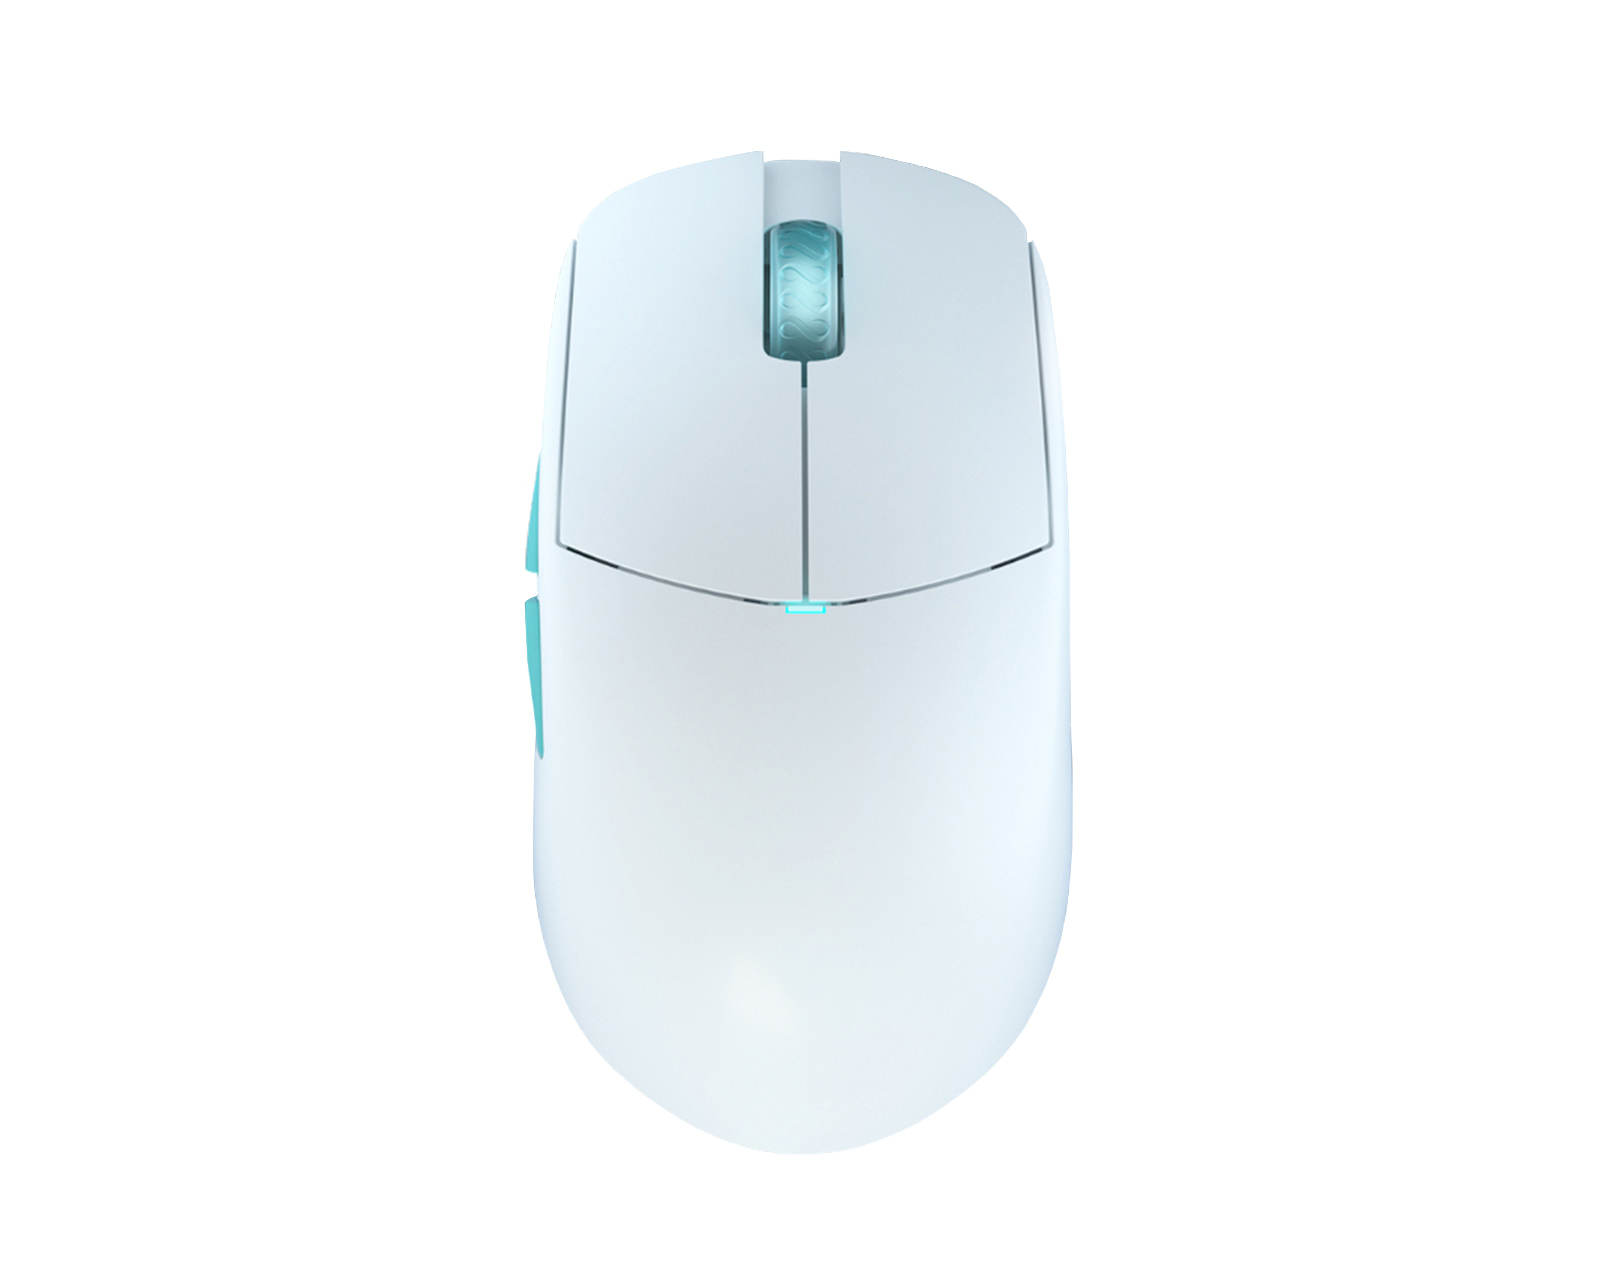 Lamzu Atlantis Wireless Superlight Gaming Mouse - White - us 